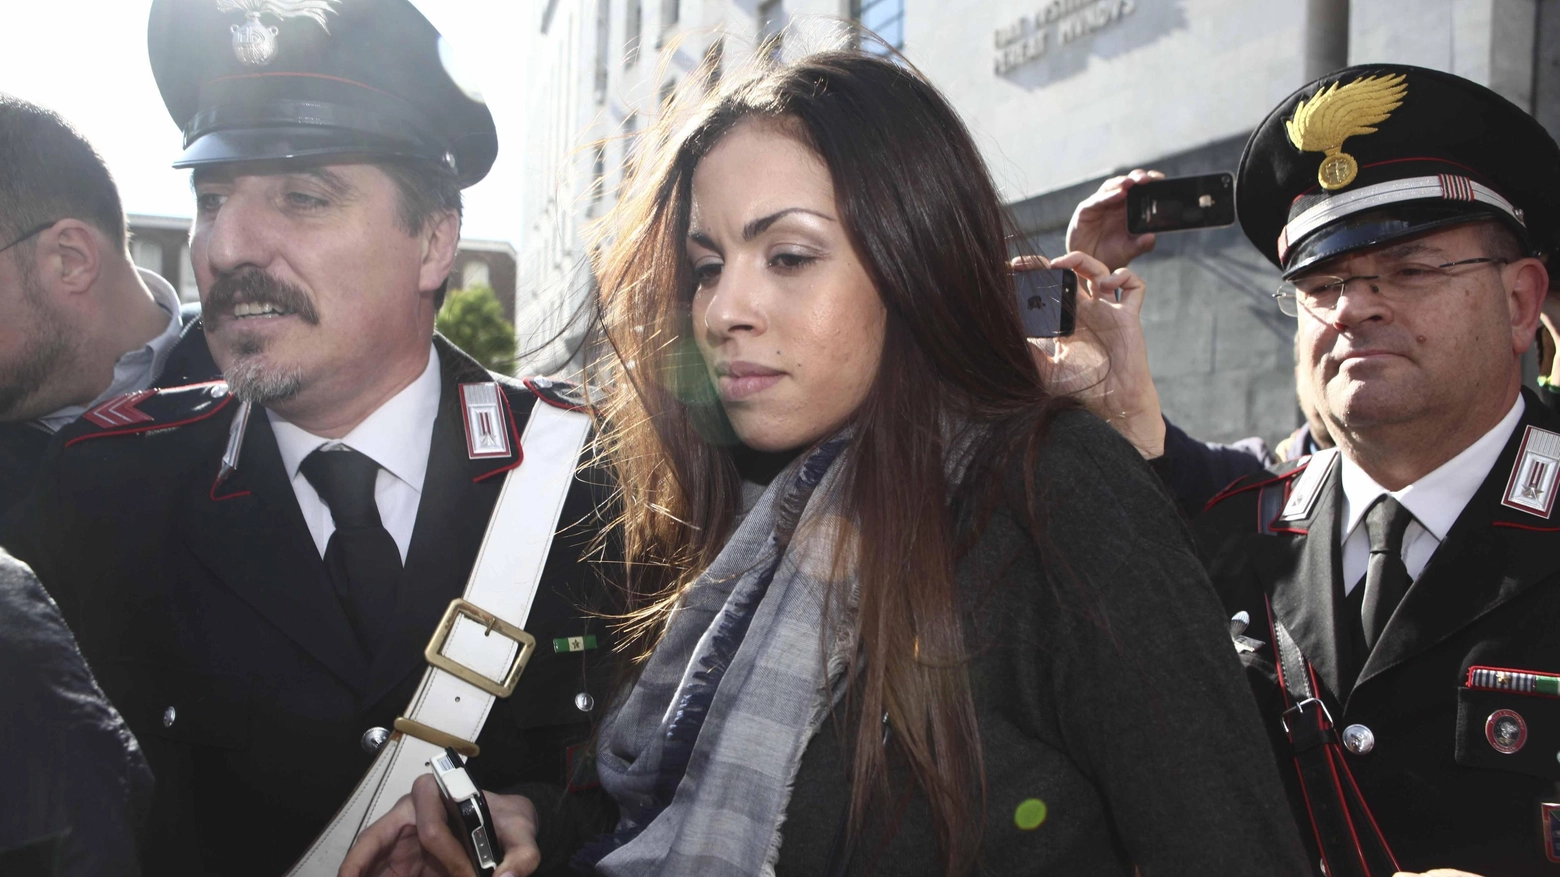 Ruby Karima El Mahroug all'uscita dal tribunale 